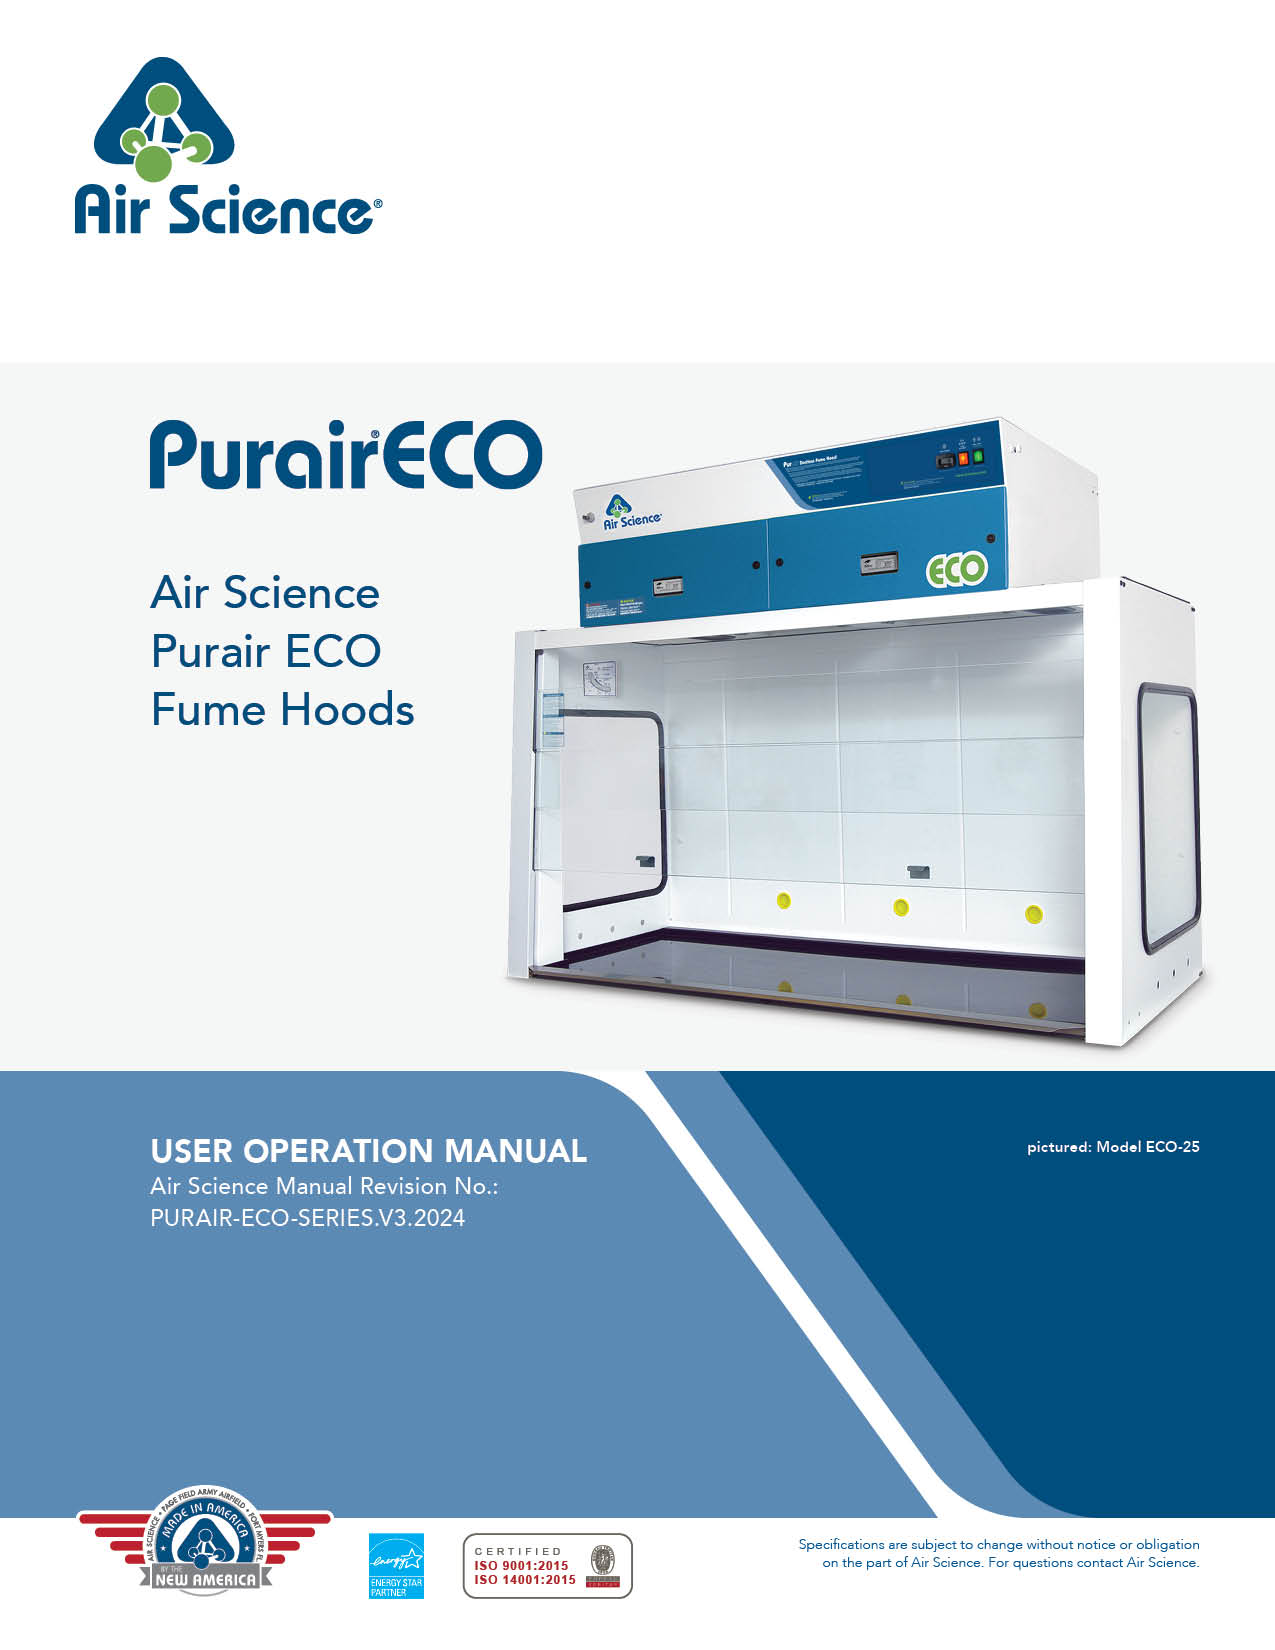 purairECO operating manual